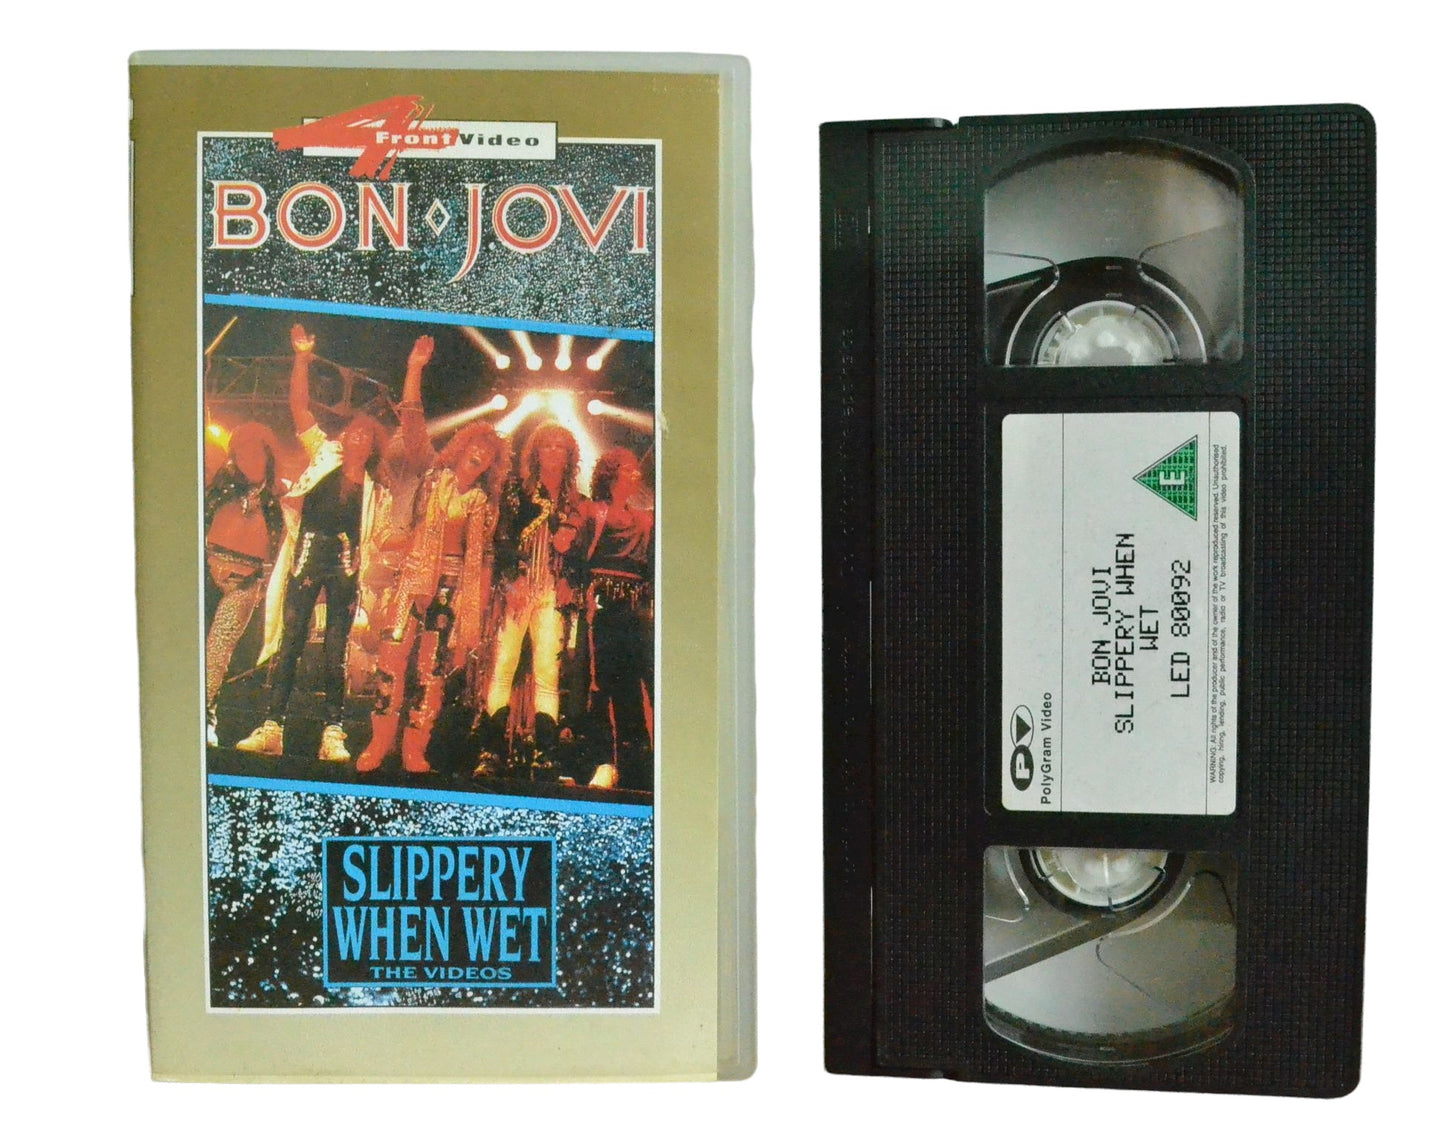 Bon Jovi Slippery When Wet The Video - Jon Bon Jovi - 4Front Video - Music - Pal VHS-